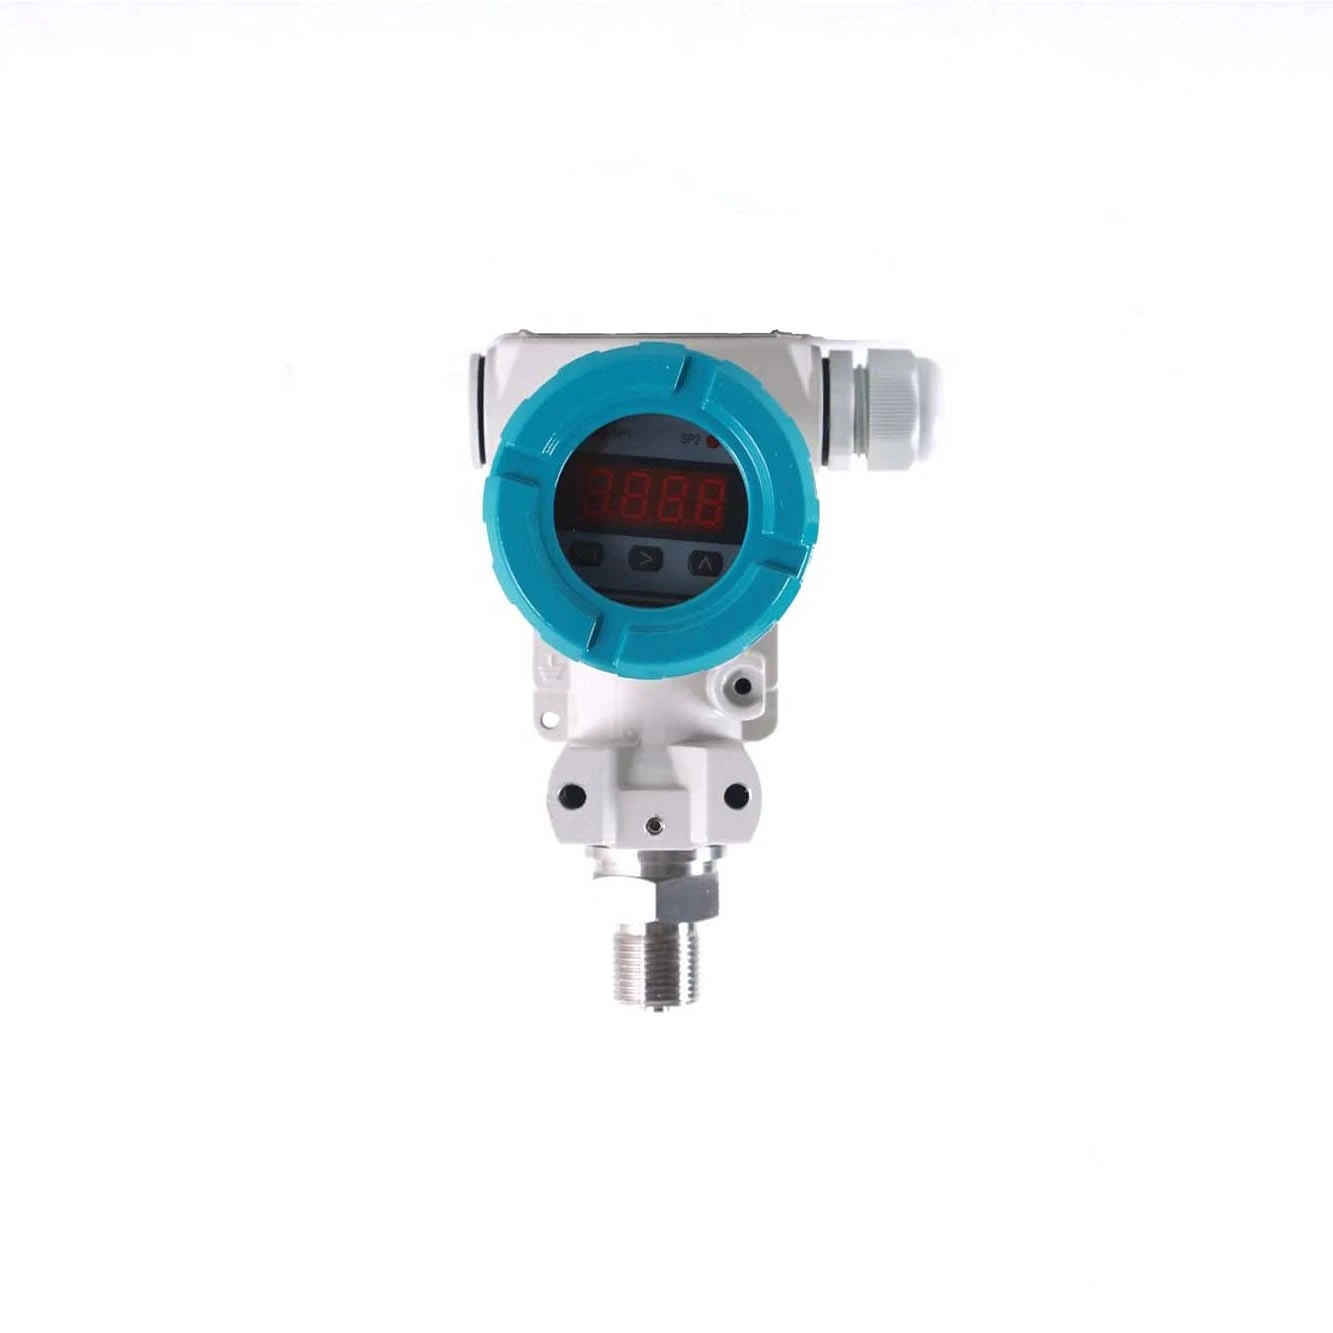 Digital oil water pressure switch with 2088 cast aluminium case